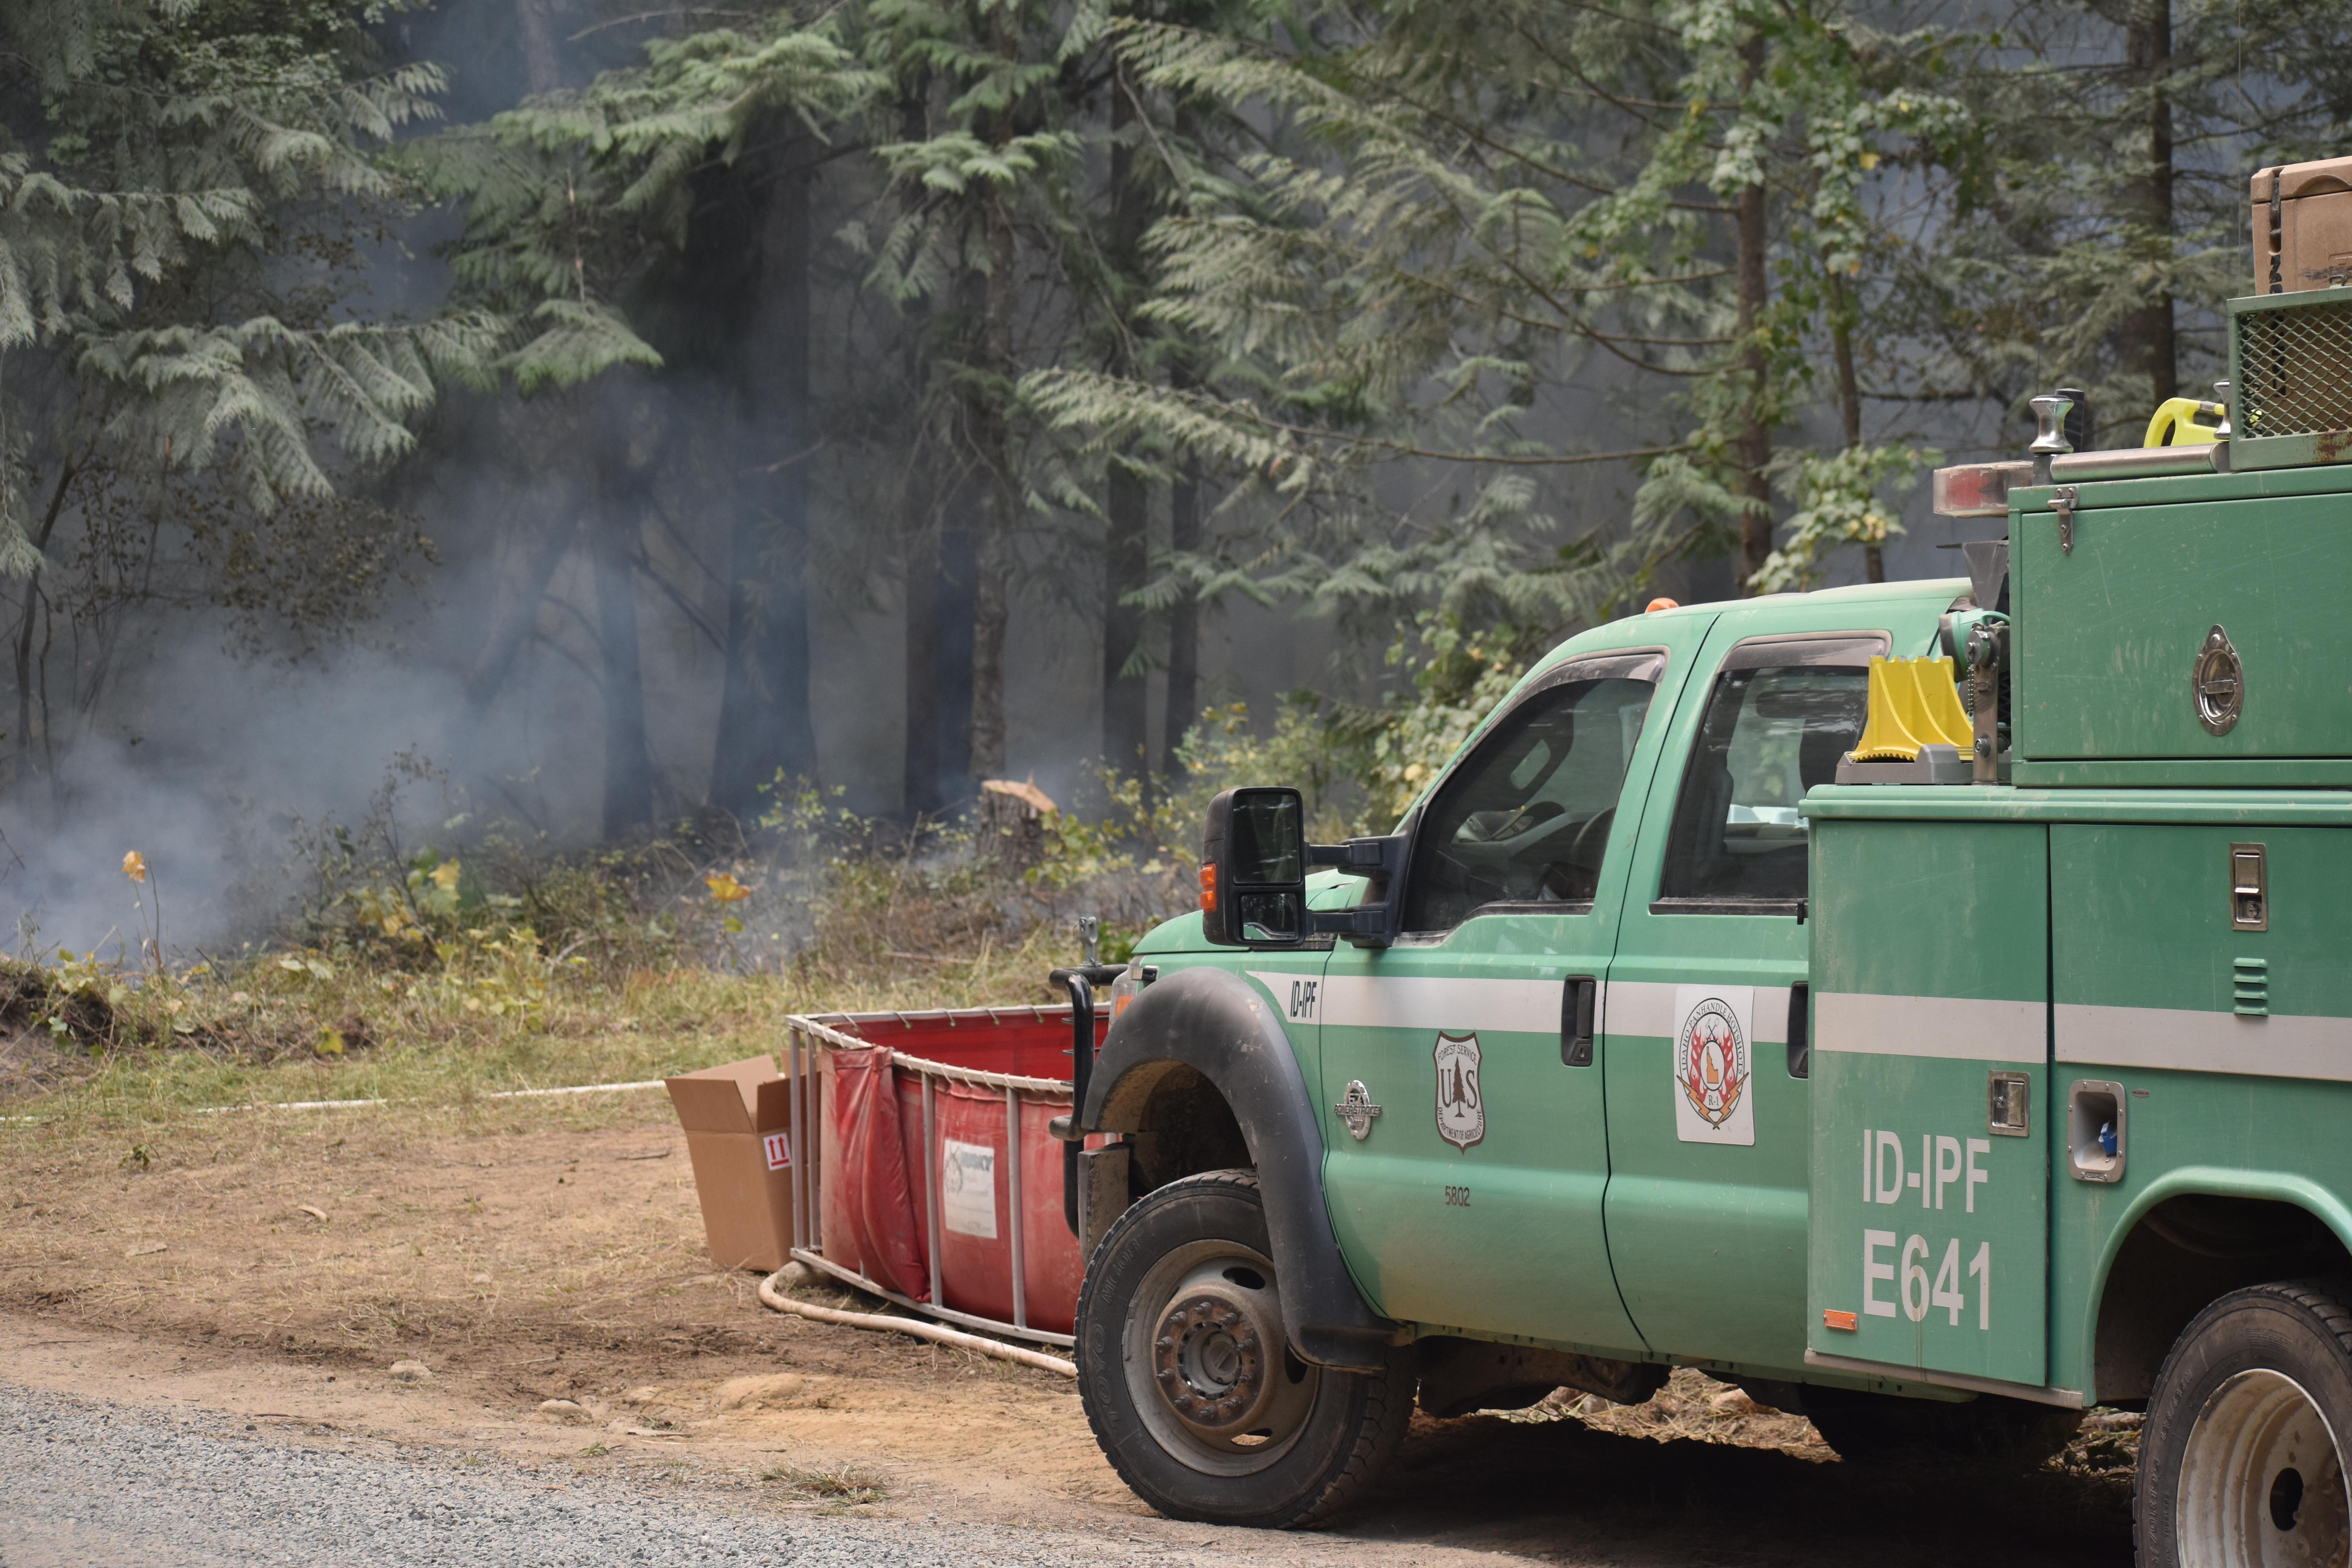 Idaho Panhandle Hotshots are working on fireline